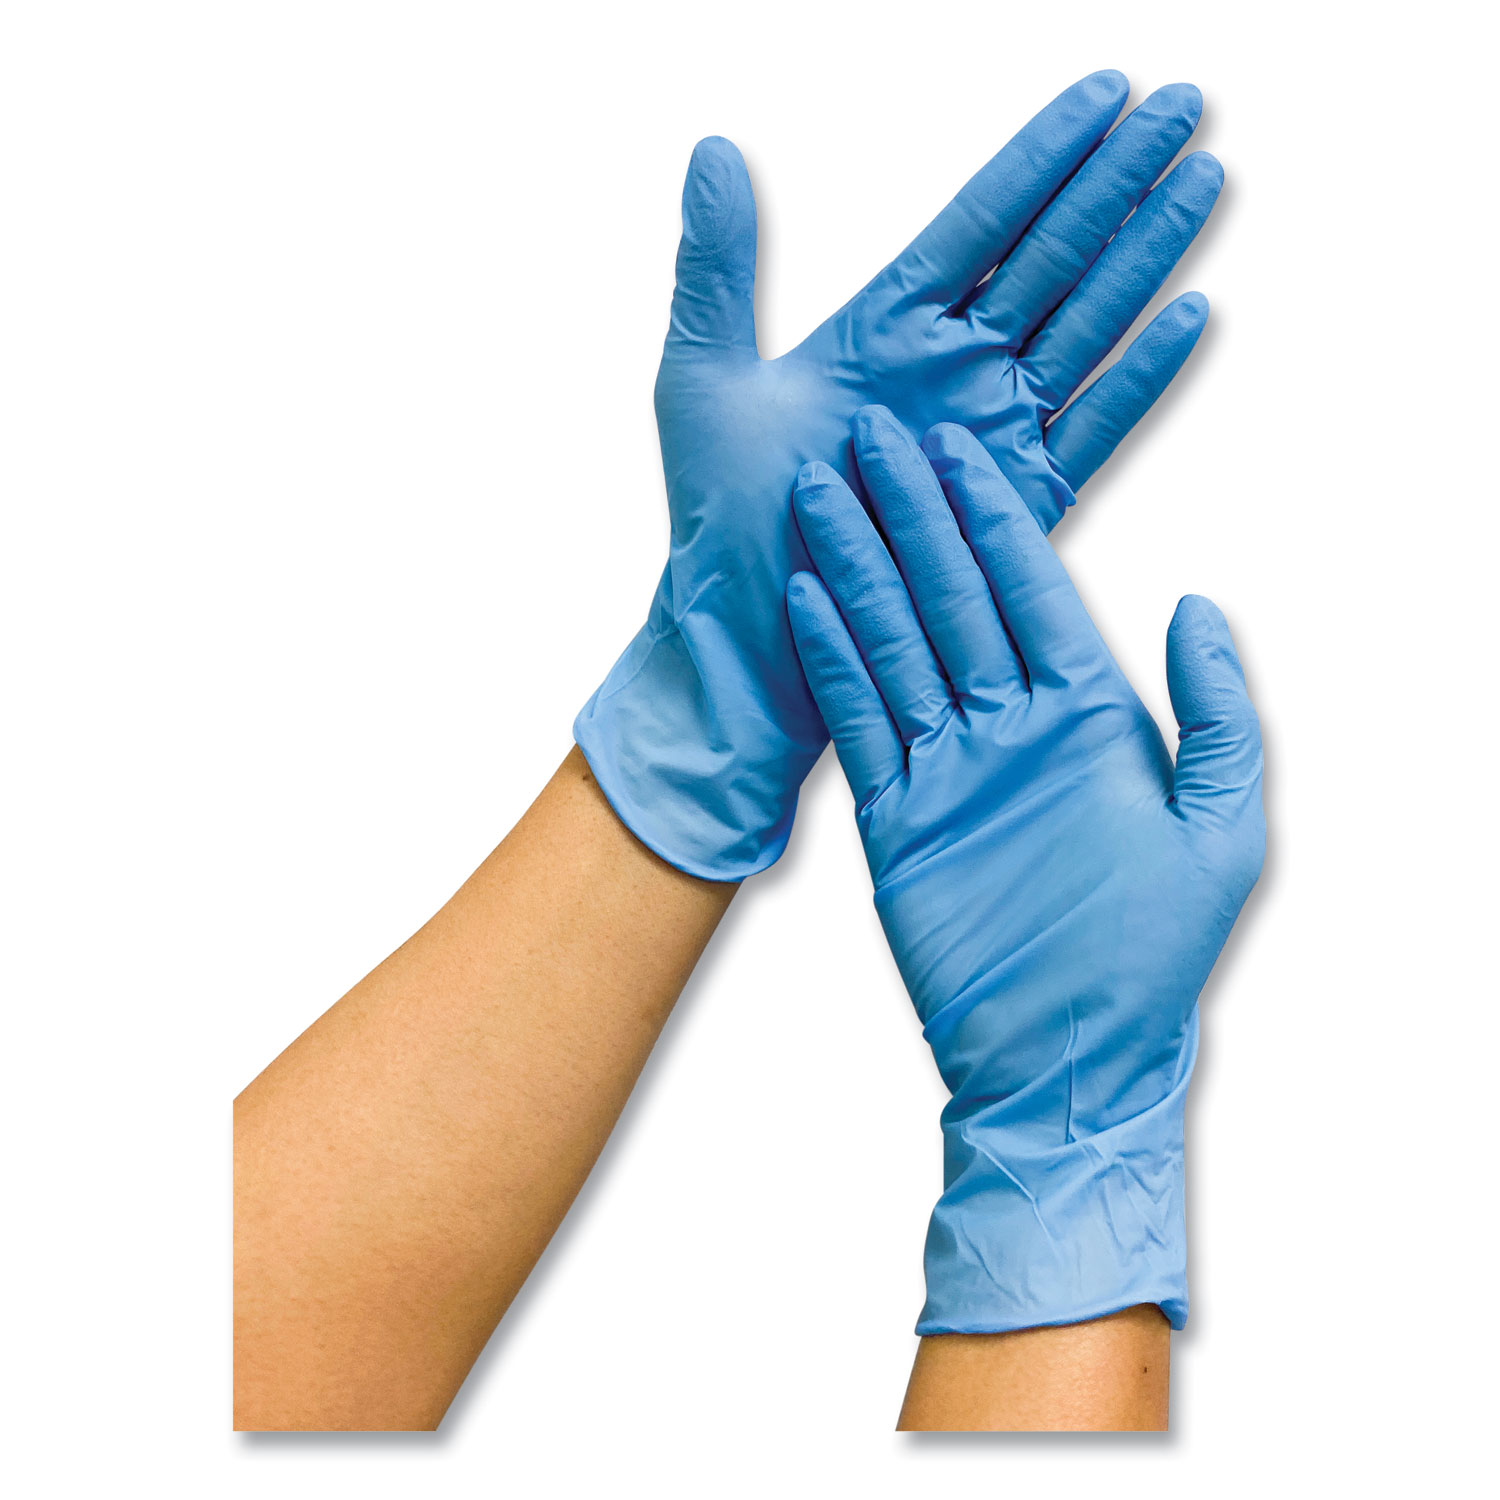  GN1 PE16917 Powder-Free Nitrile Gloves, Blue, Small, 1,000/Carton (GN1PE16917) 